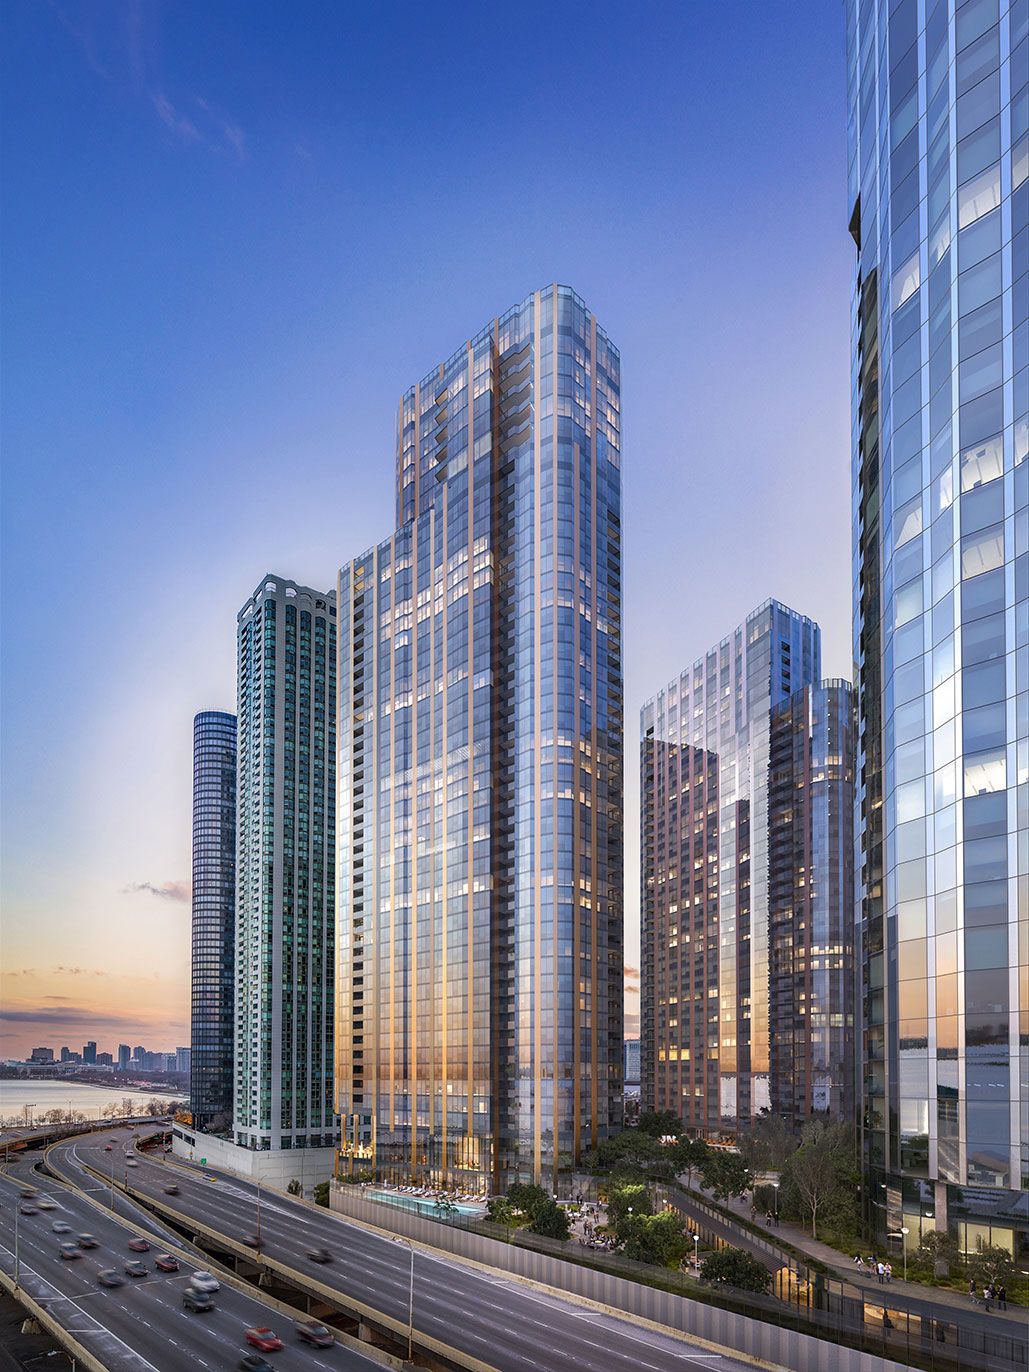 Completion Imminent For Cirrus Condominium Tower In Lakeshore East